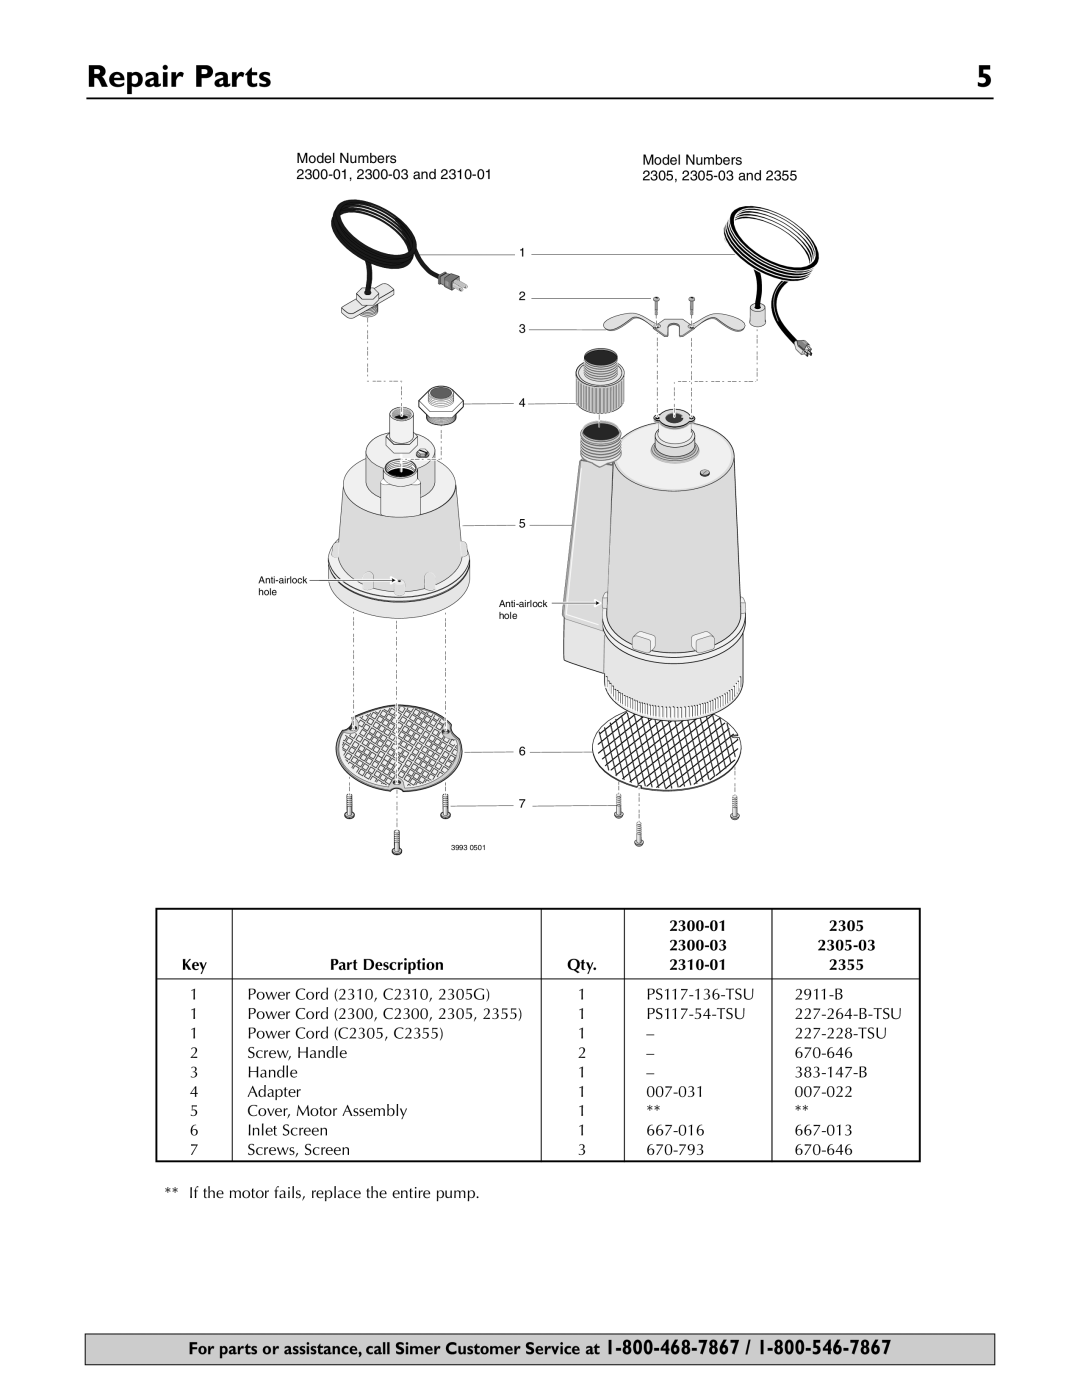 Simer Pumps 2355 owner manual Repair Parts, 2300-01, 2305, 2300-03, Part Description, 2310-01 